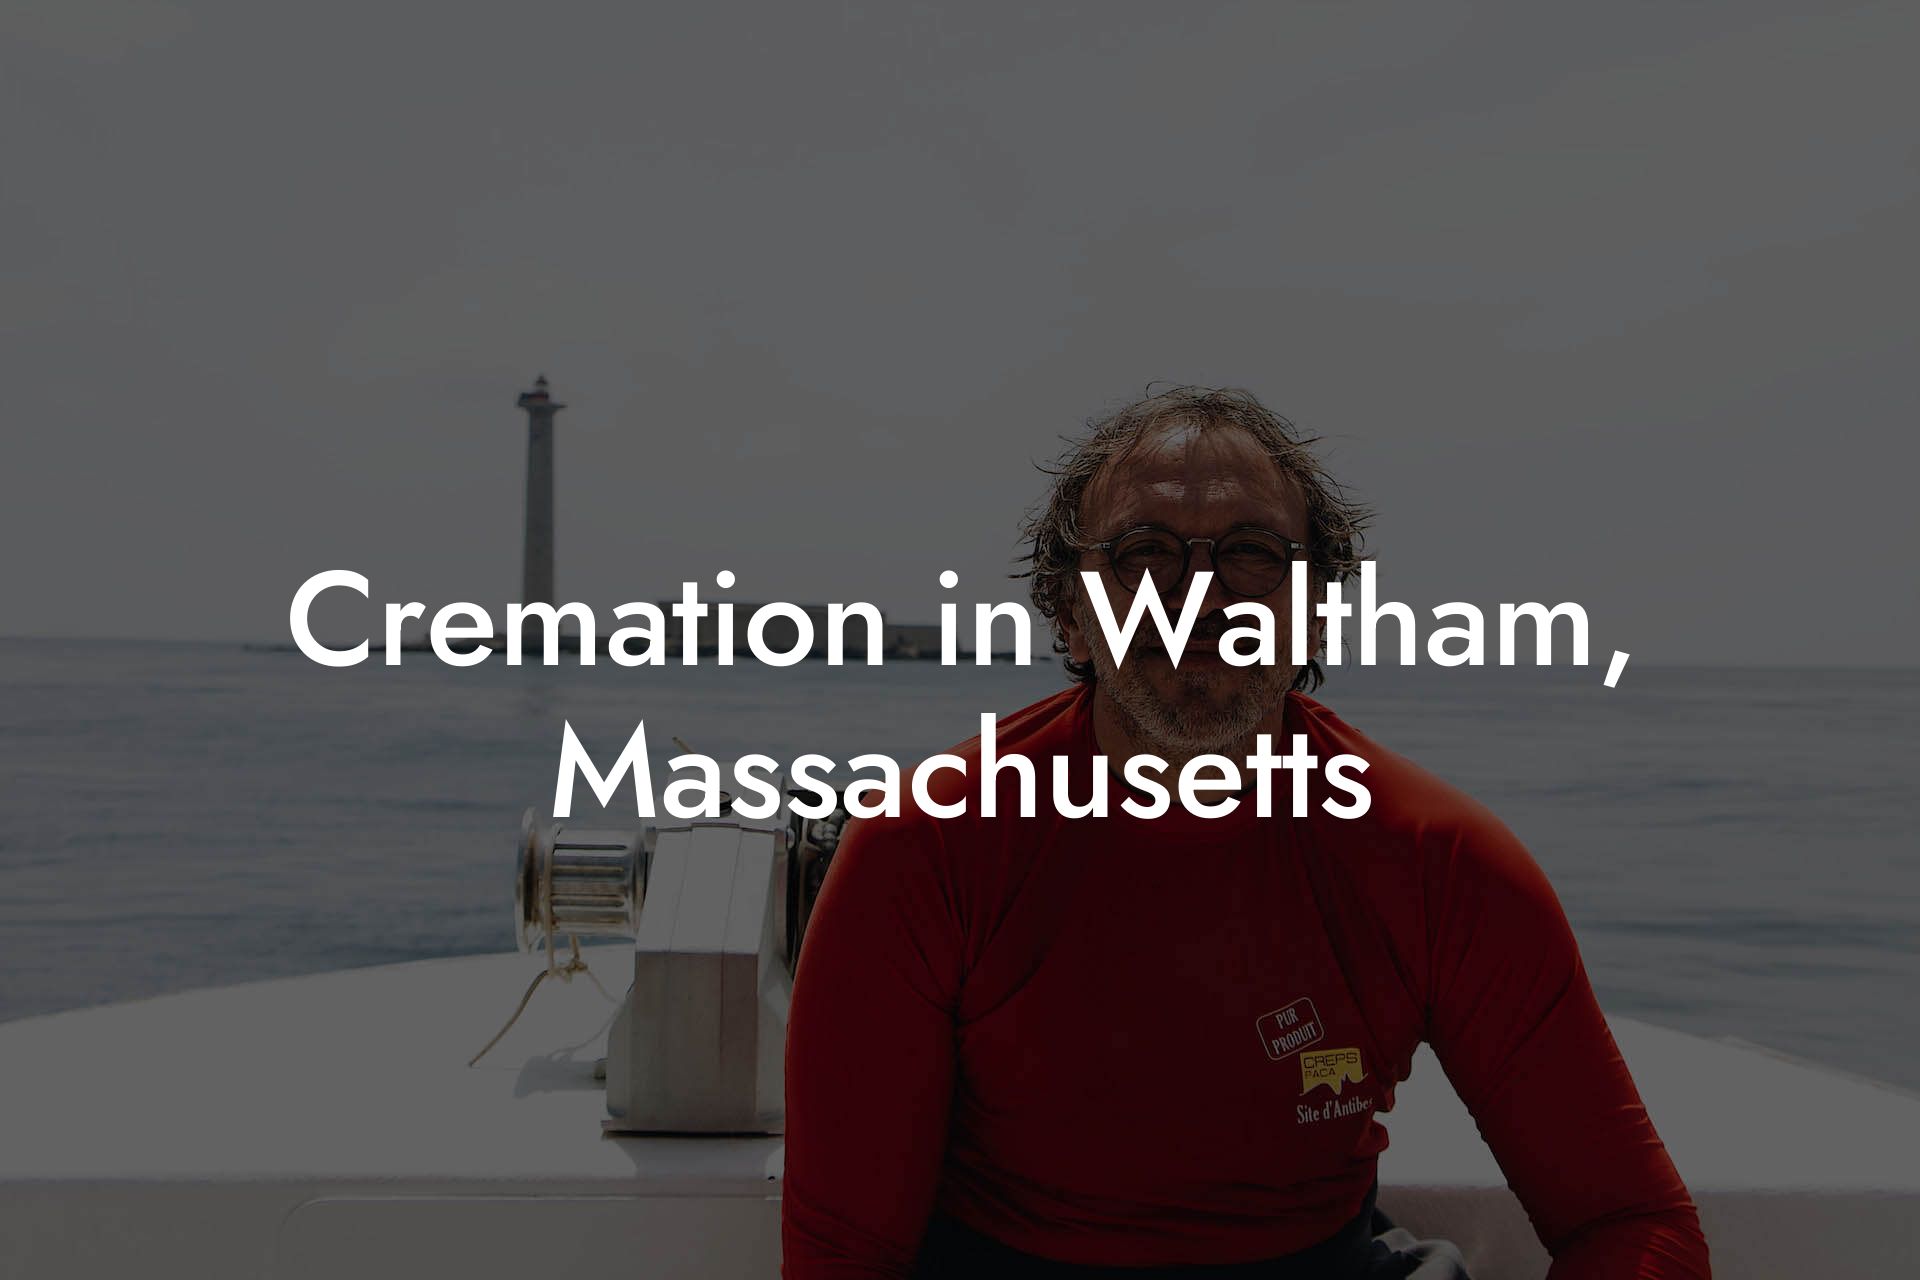 Cremation in Waltham, Massachusetts